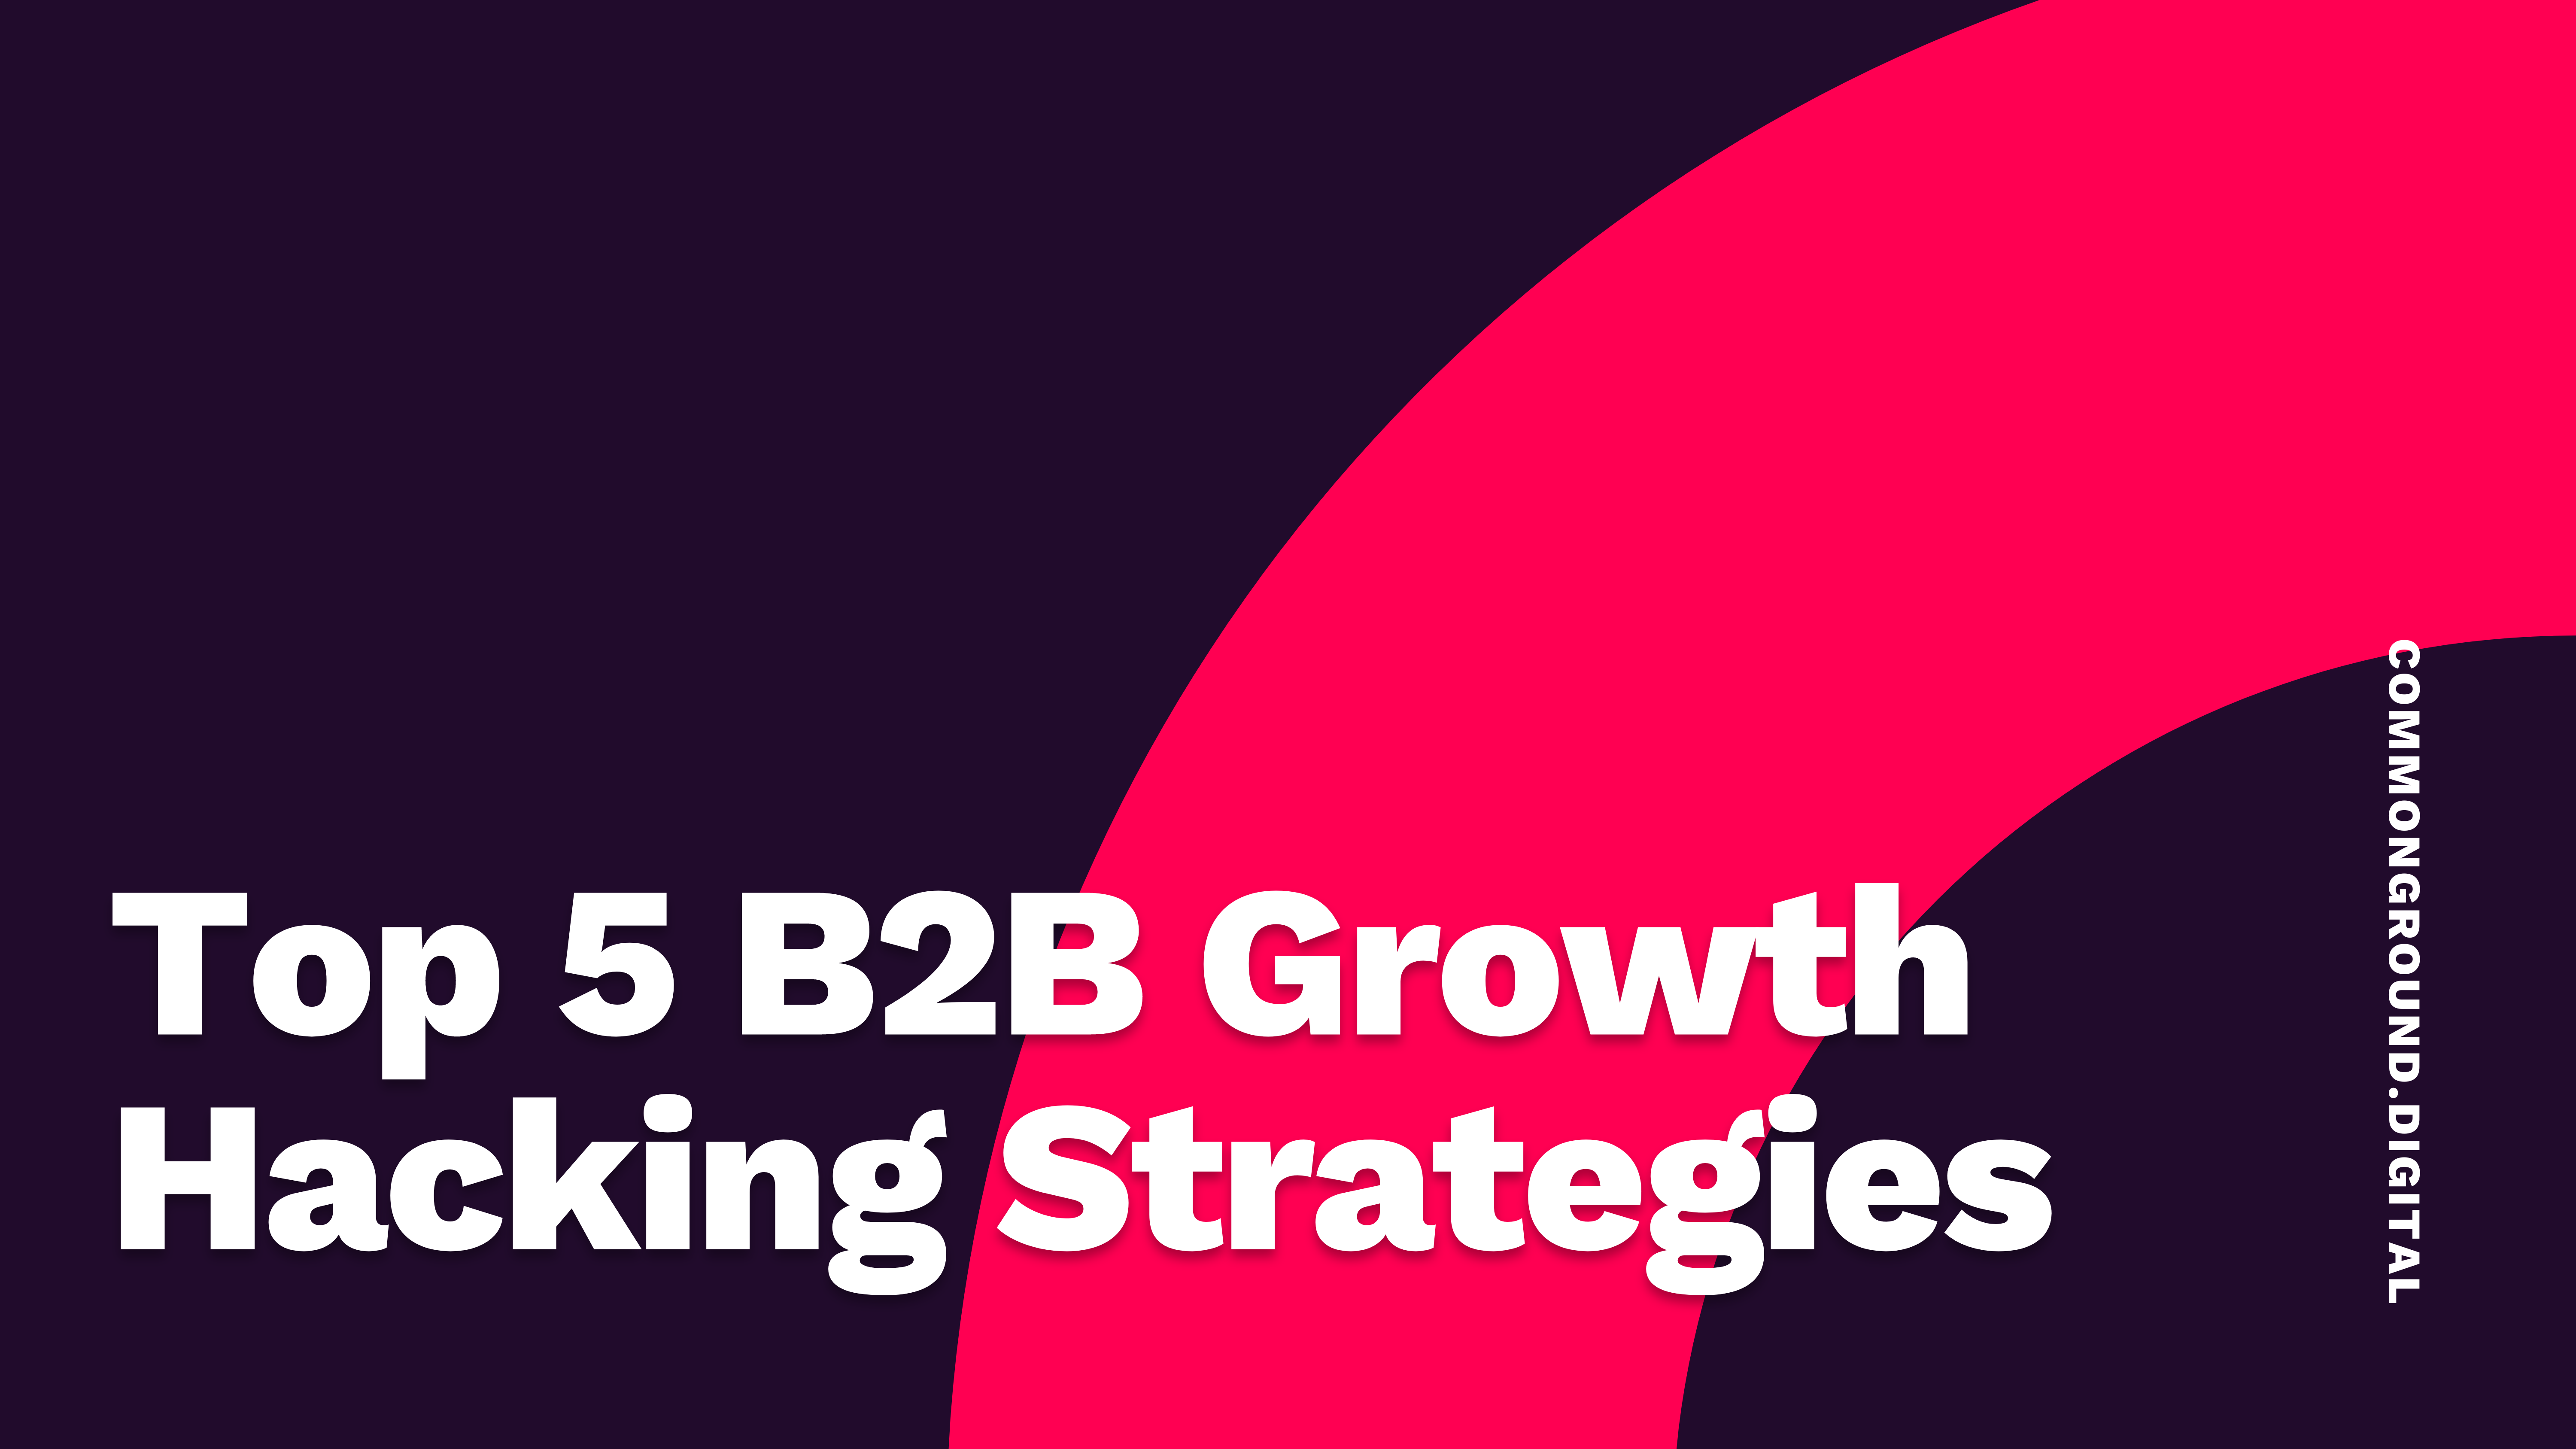 Top 5 B2B Growth Hacking Strategies